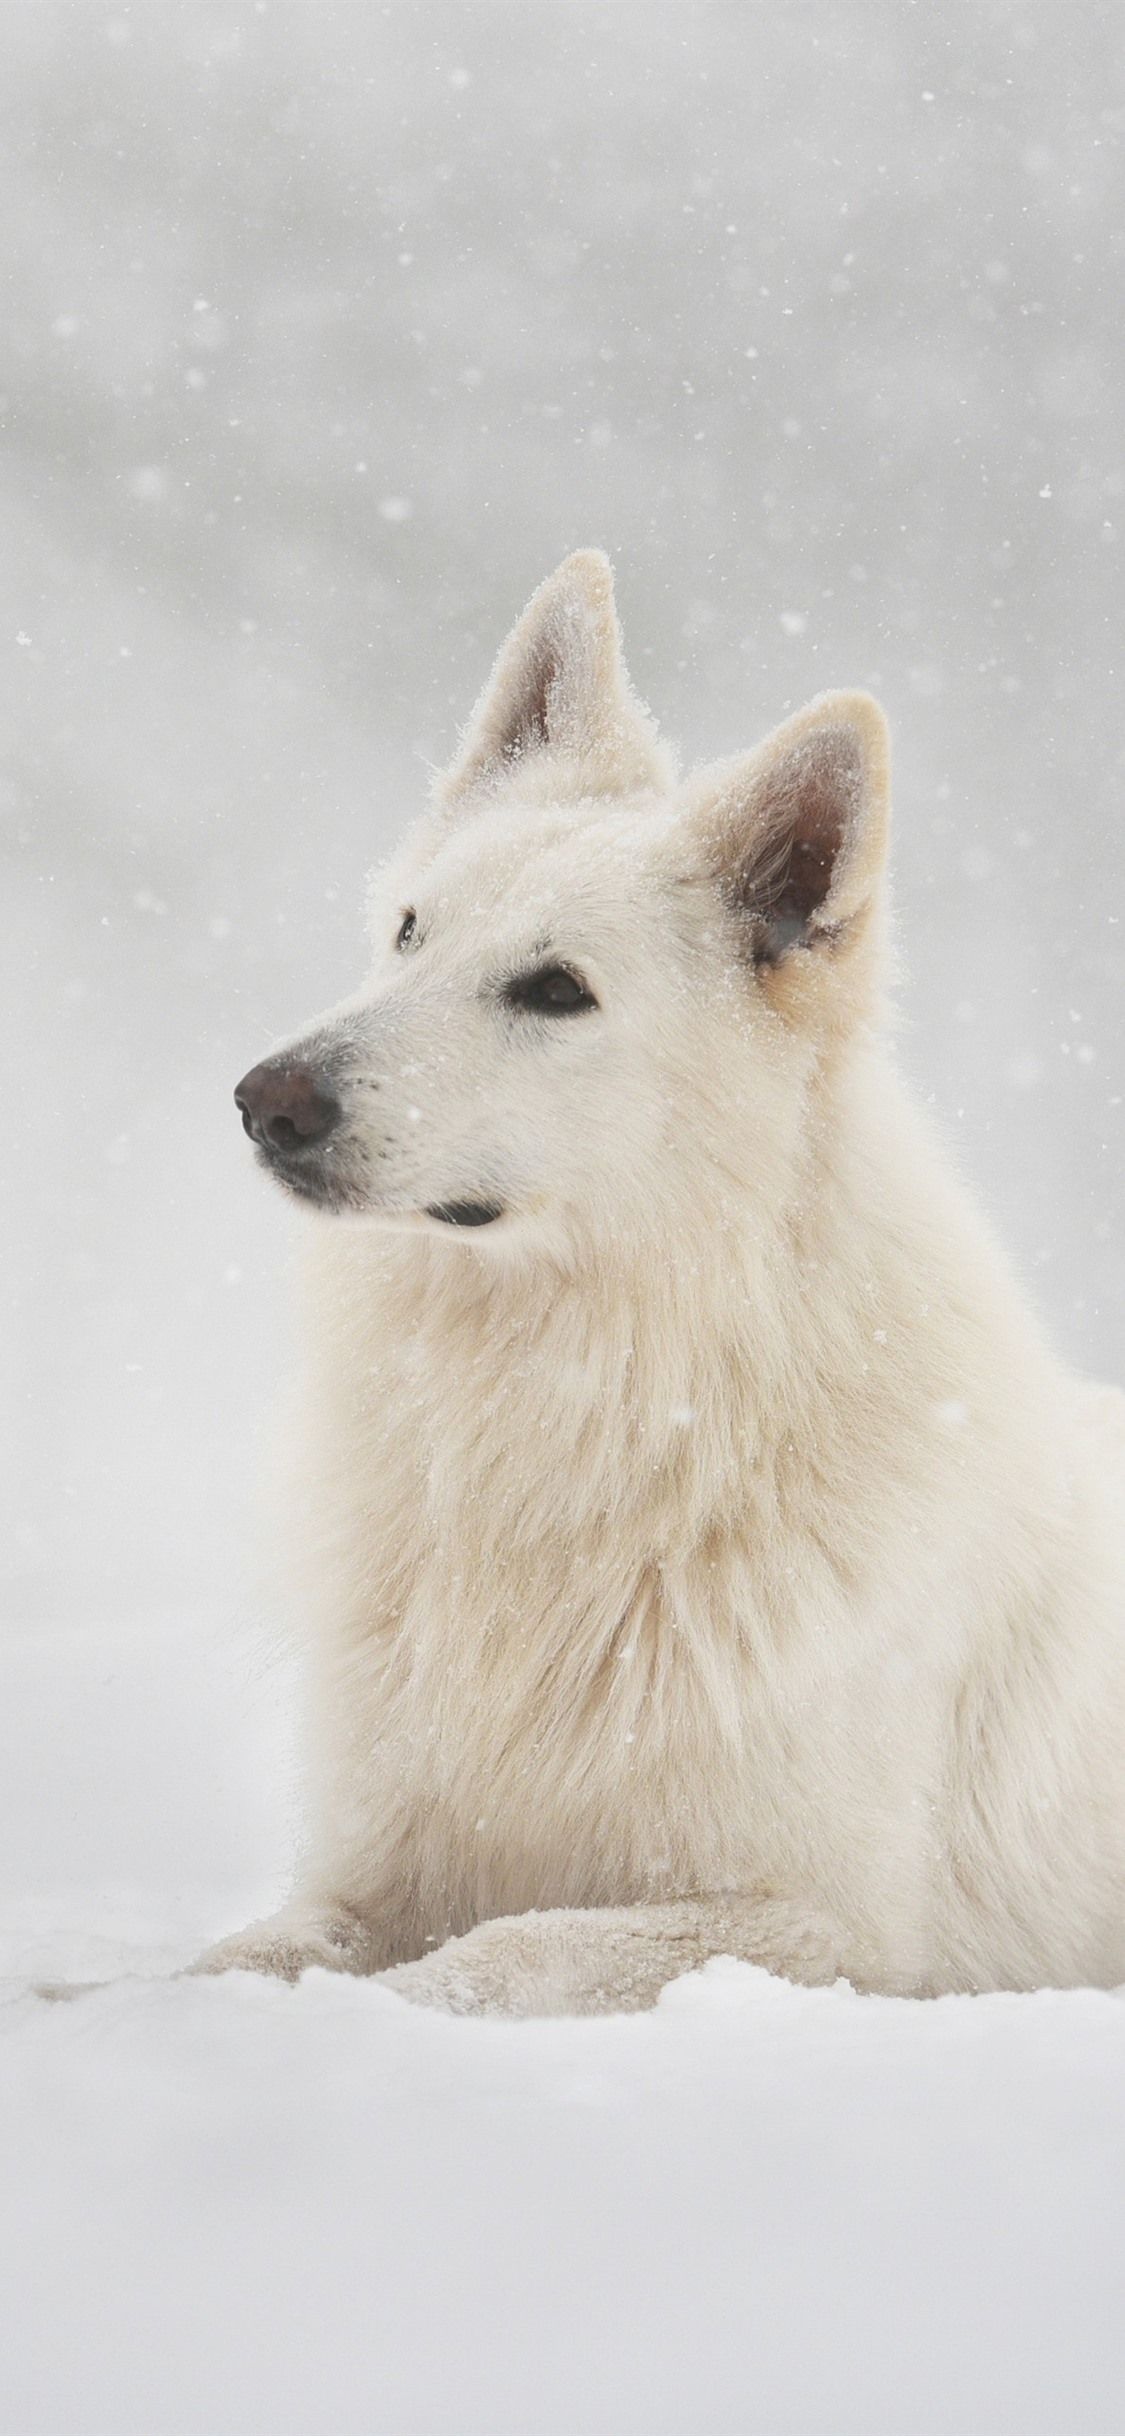 Swiss Shepherd Dog, Snow, Winter 1125x2436 IPhone 11 Pro XS X Wallpaper, Background, Picture, Image